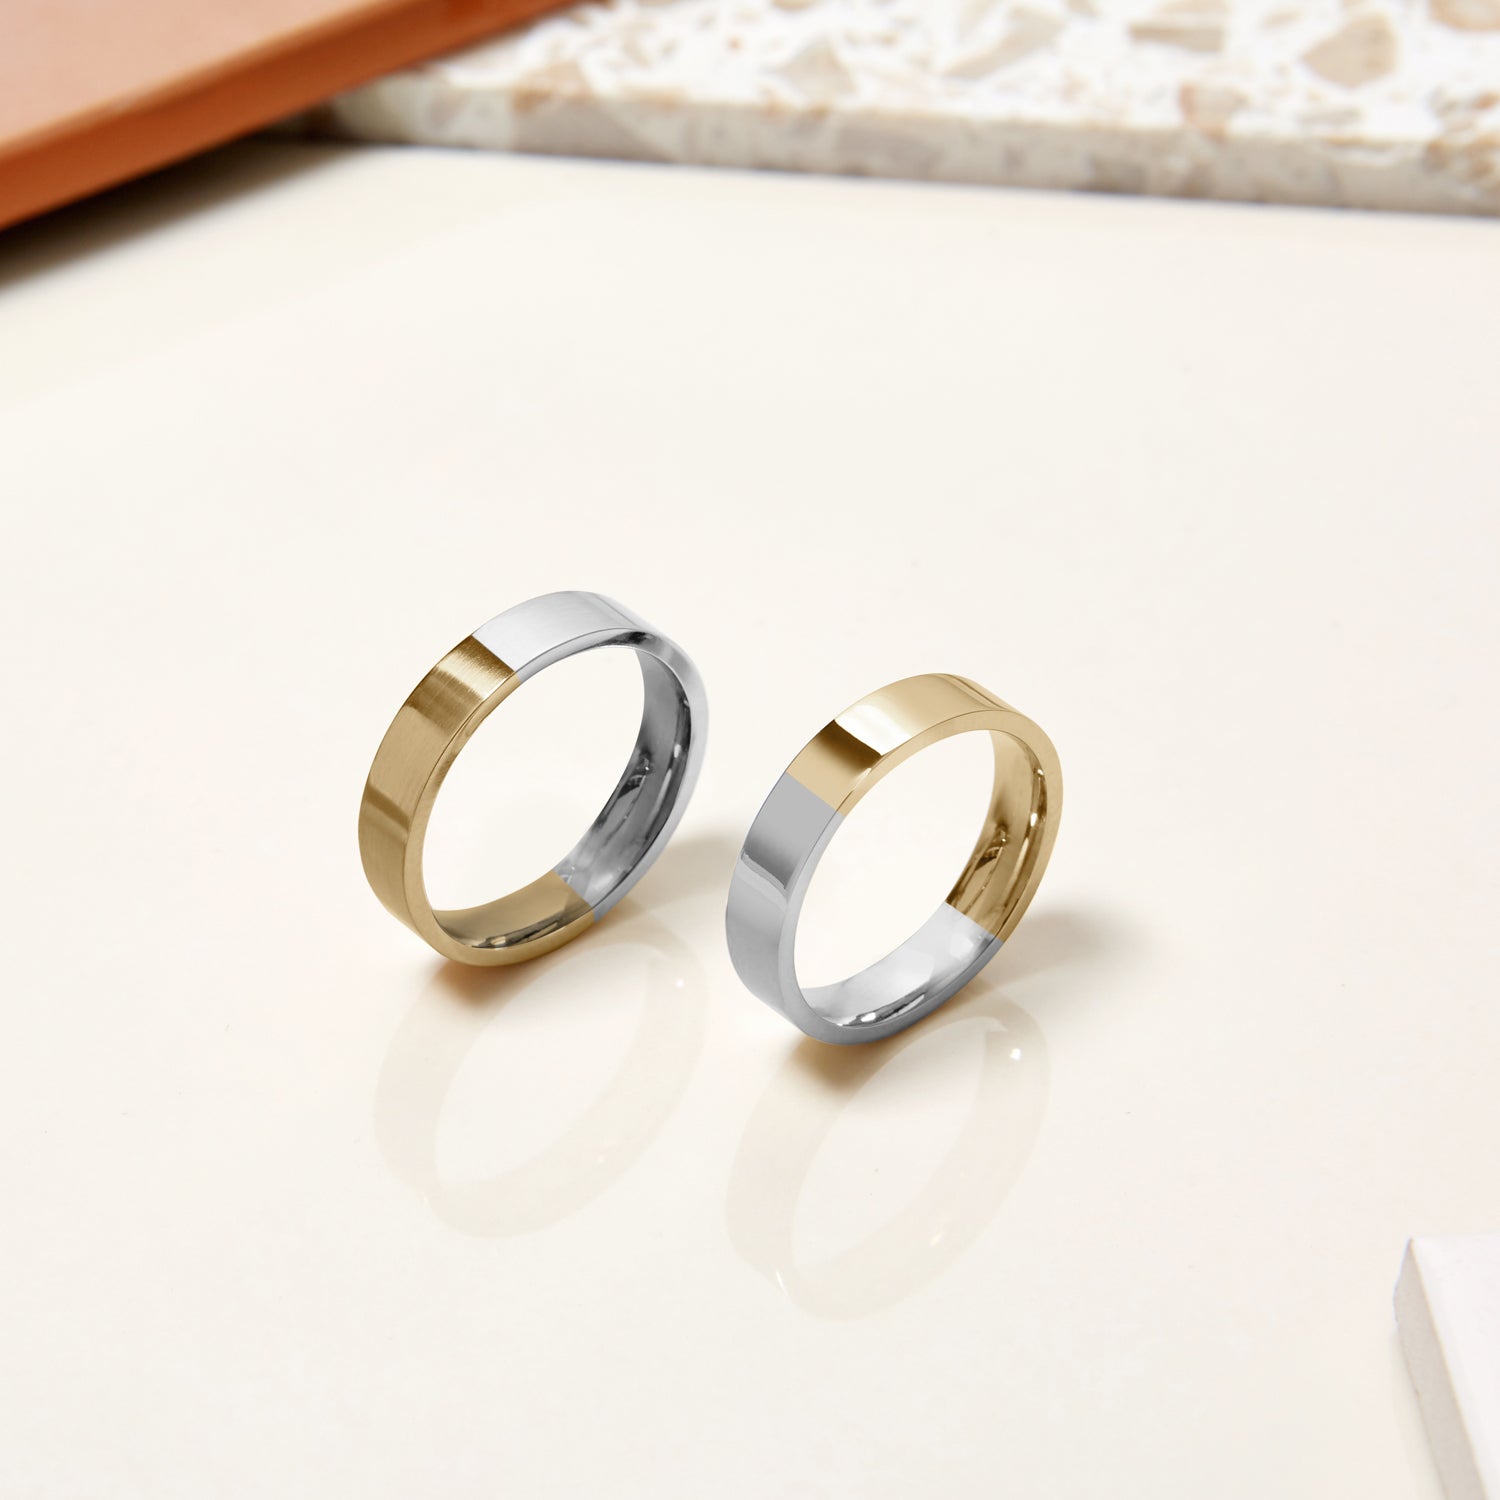 Bespoke Handmade Wedding Rings